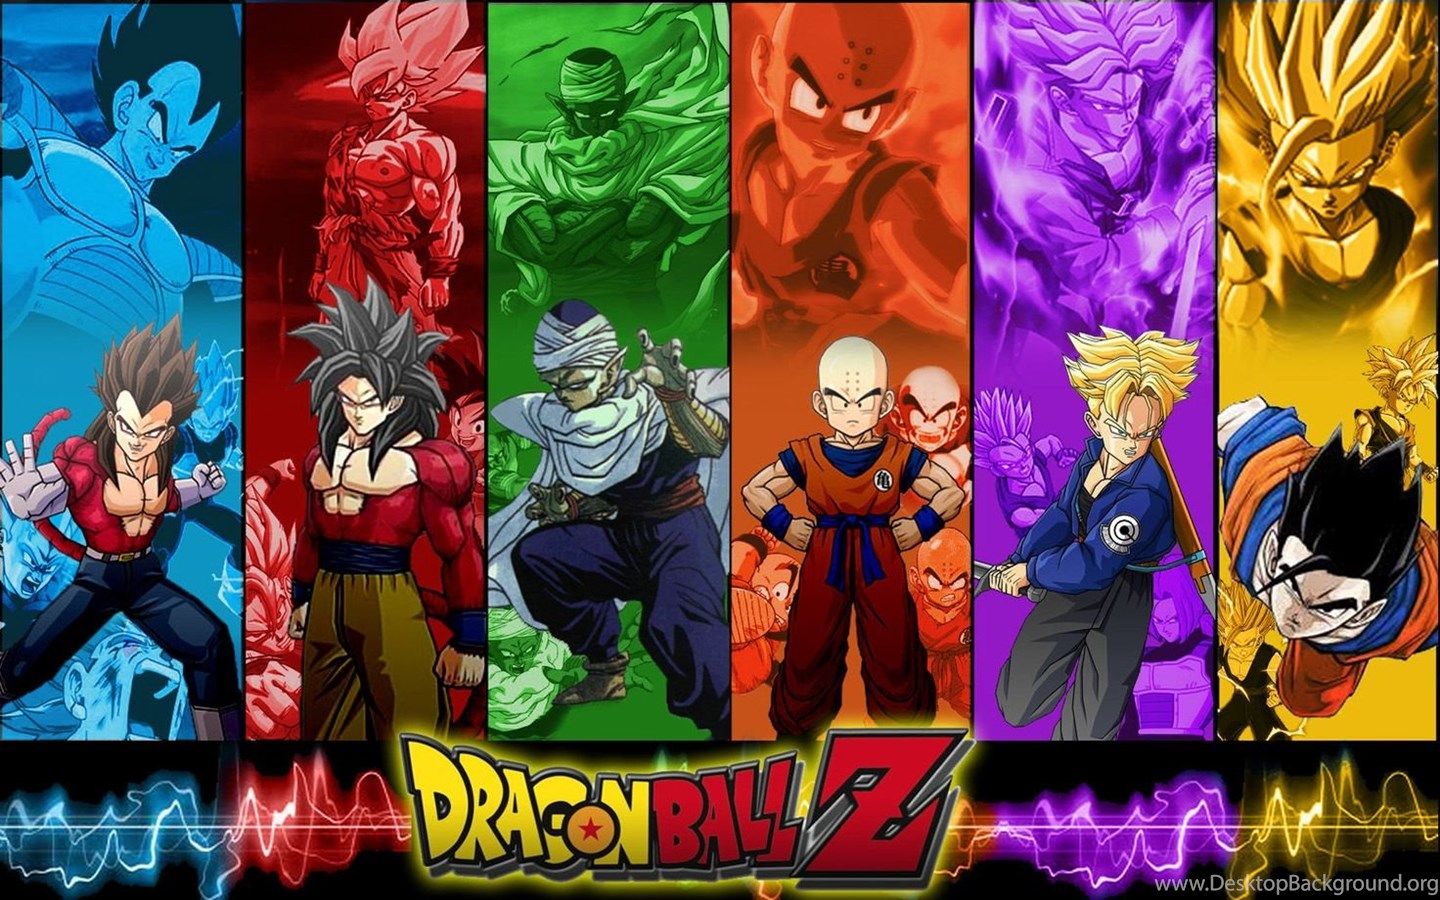 Dragon Ball Z Characters Desktop Wallpaper MyDigitalDesign.com